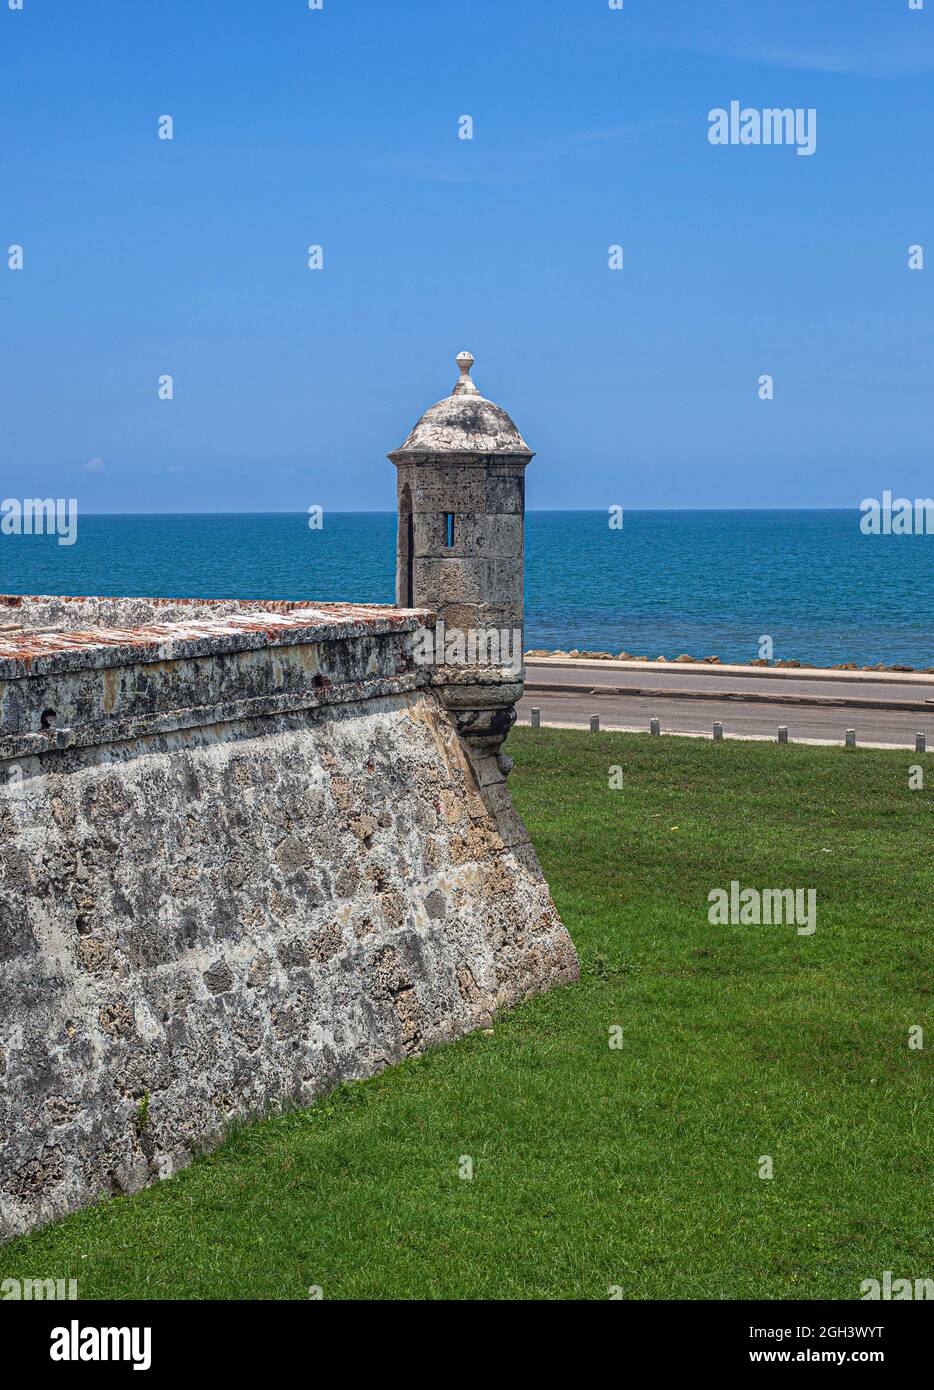 Defensive wall and turret overlooking Caribbean sea, Cartagena de Indias, Colombia. Stock Photo